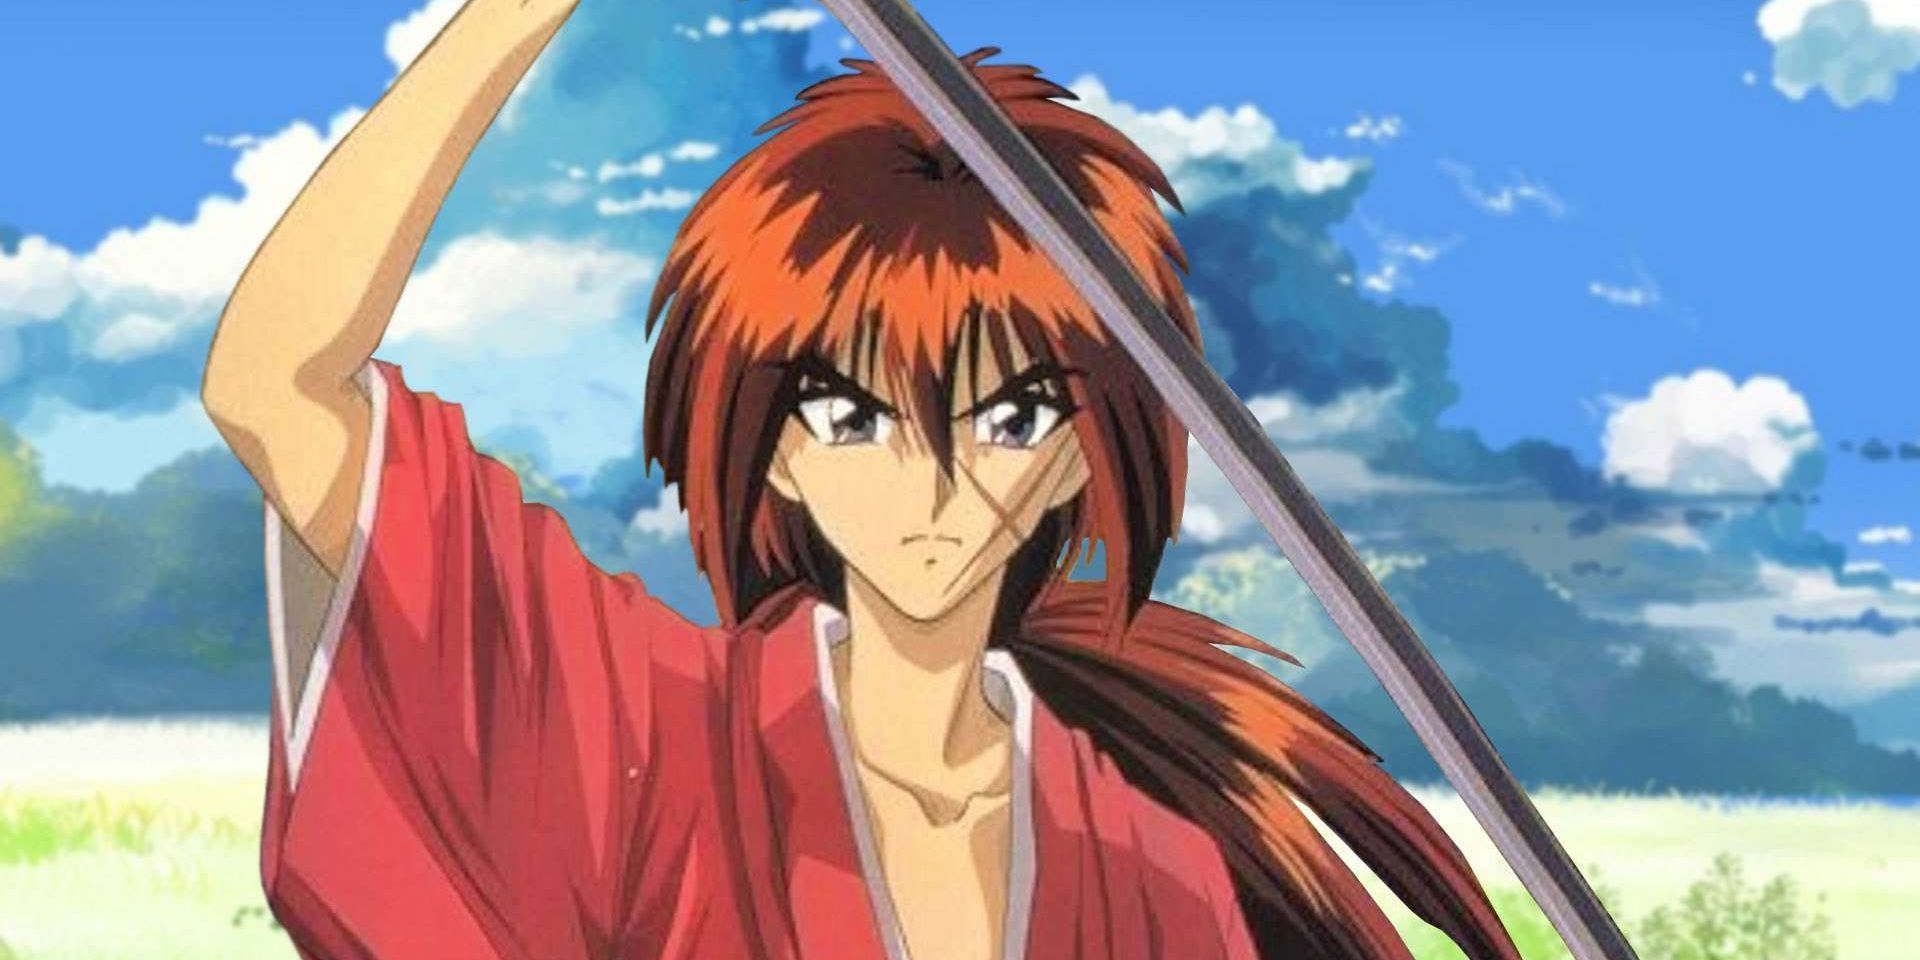 Kenshin Himura drawing his sword in the anime Rurouni Kenshin